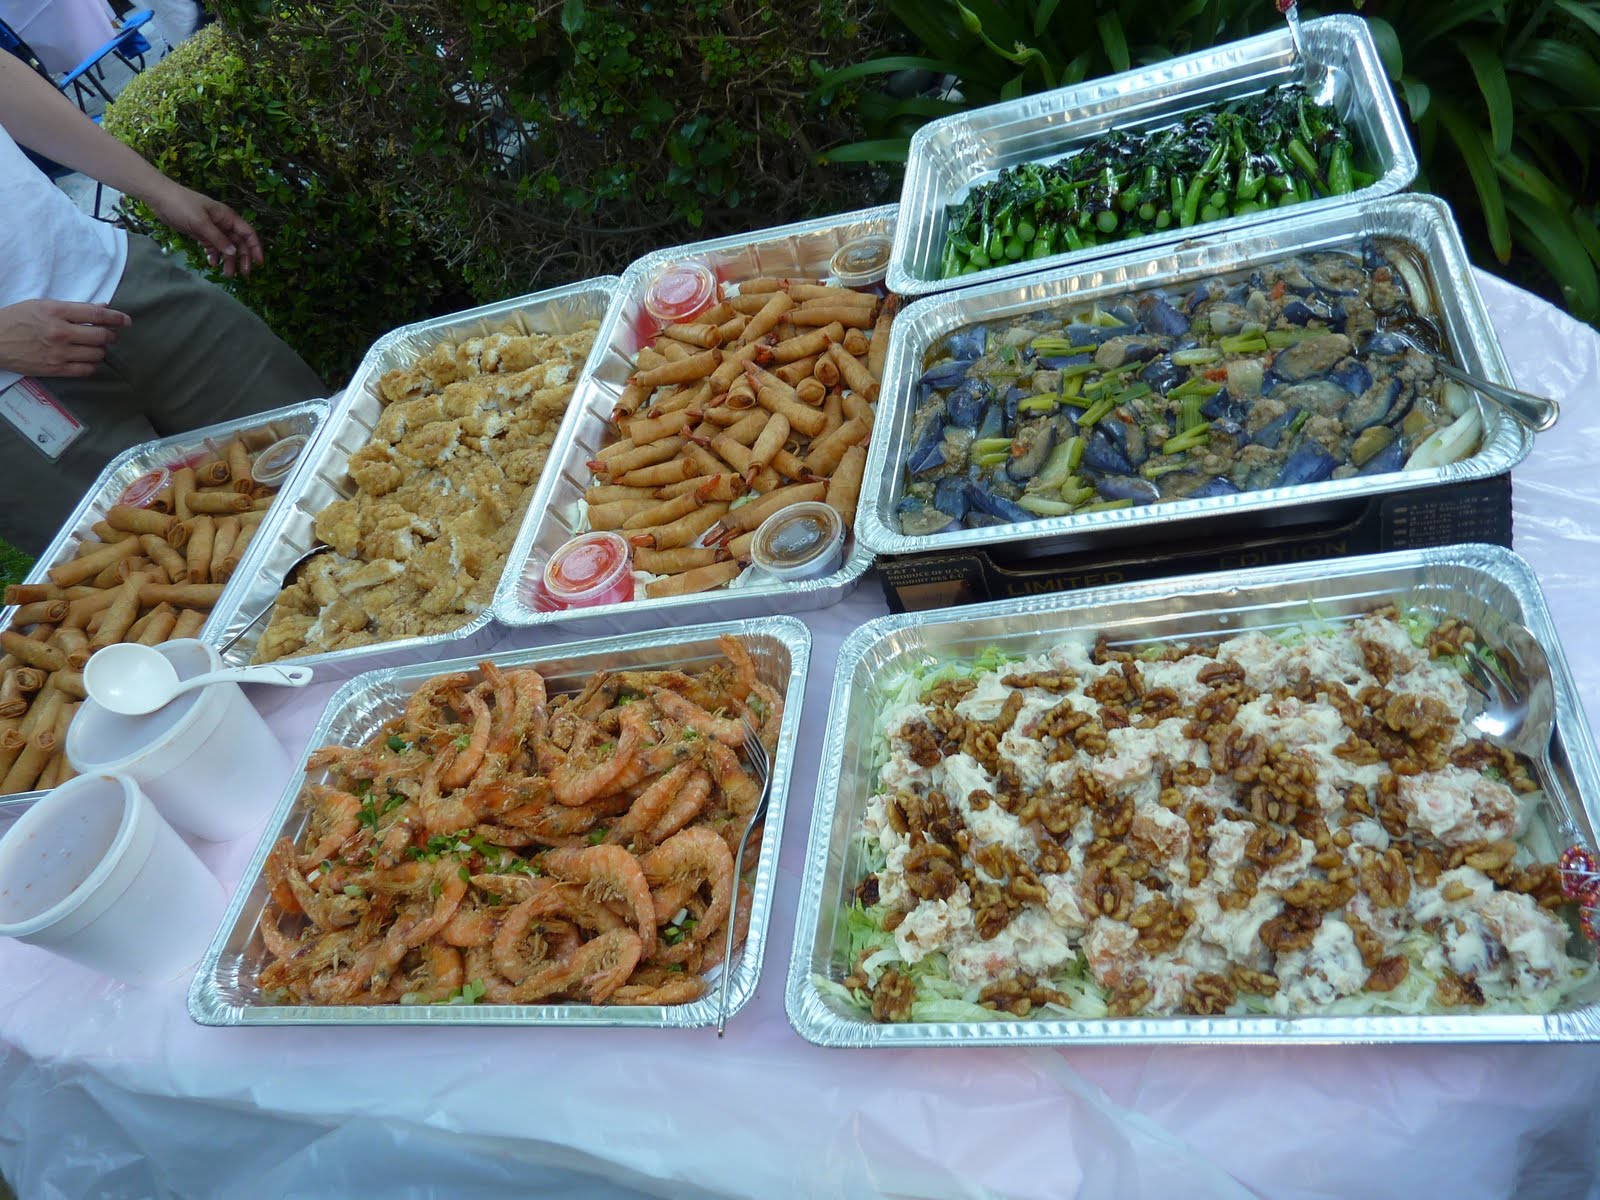 More food here: Peking sparibs, fried garlic chicken, Hong Kong style ...